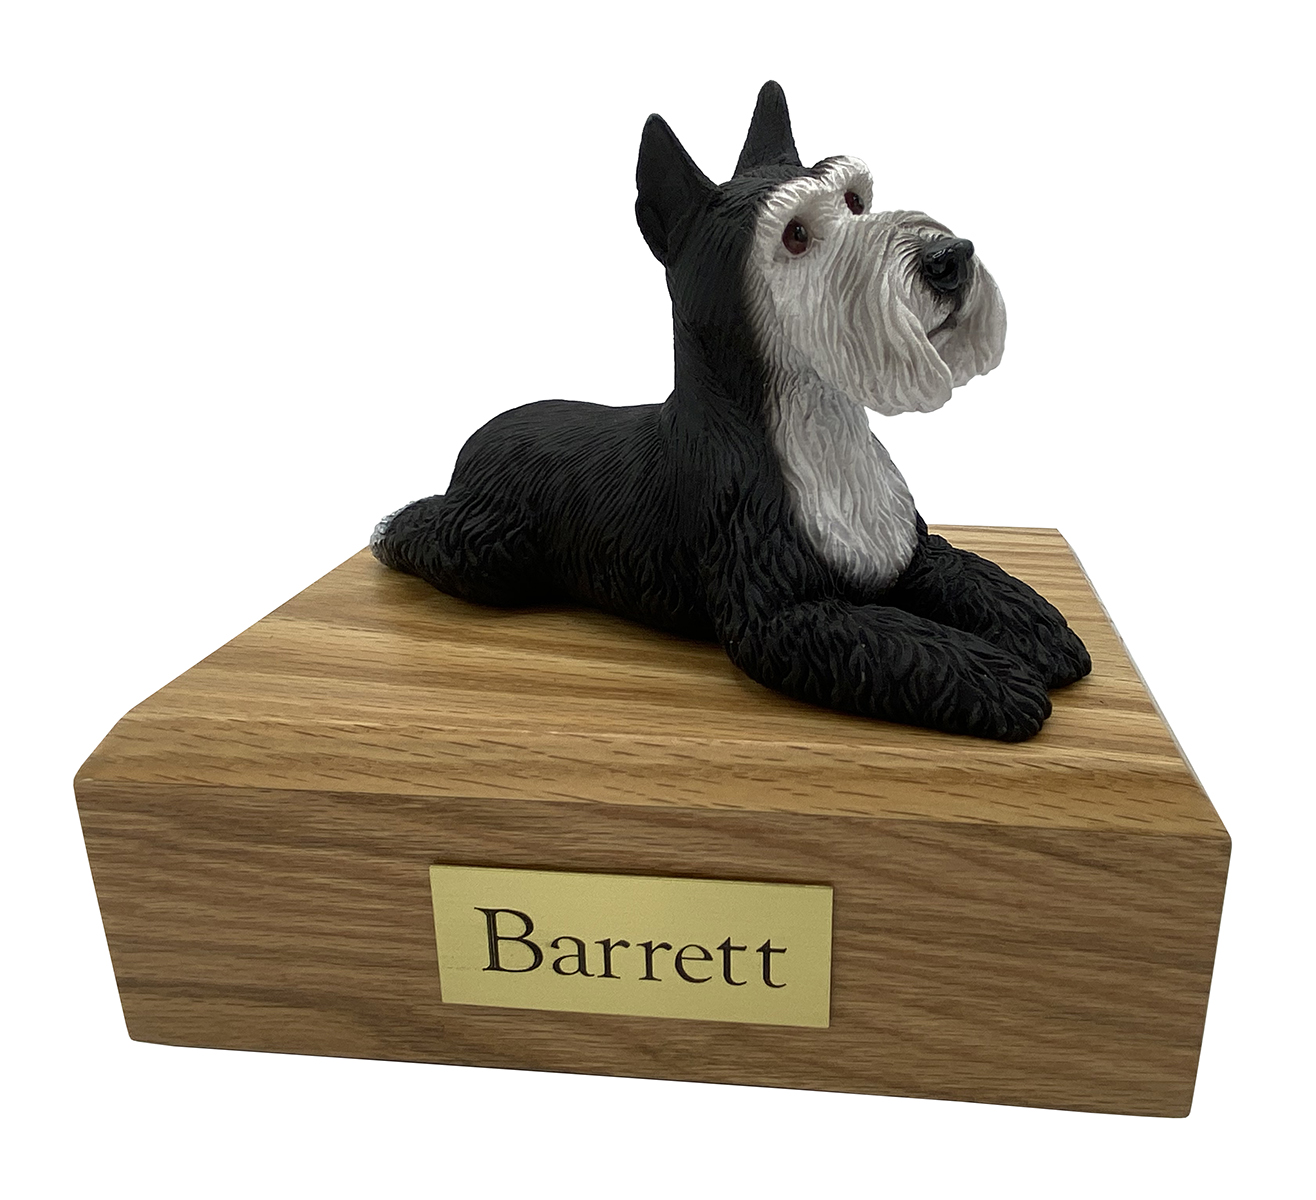 Dog, Schnauzer, Black/Silver (Ears Up) - Figurine Urn